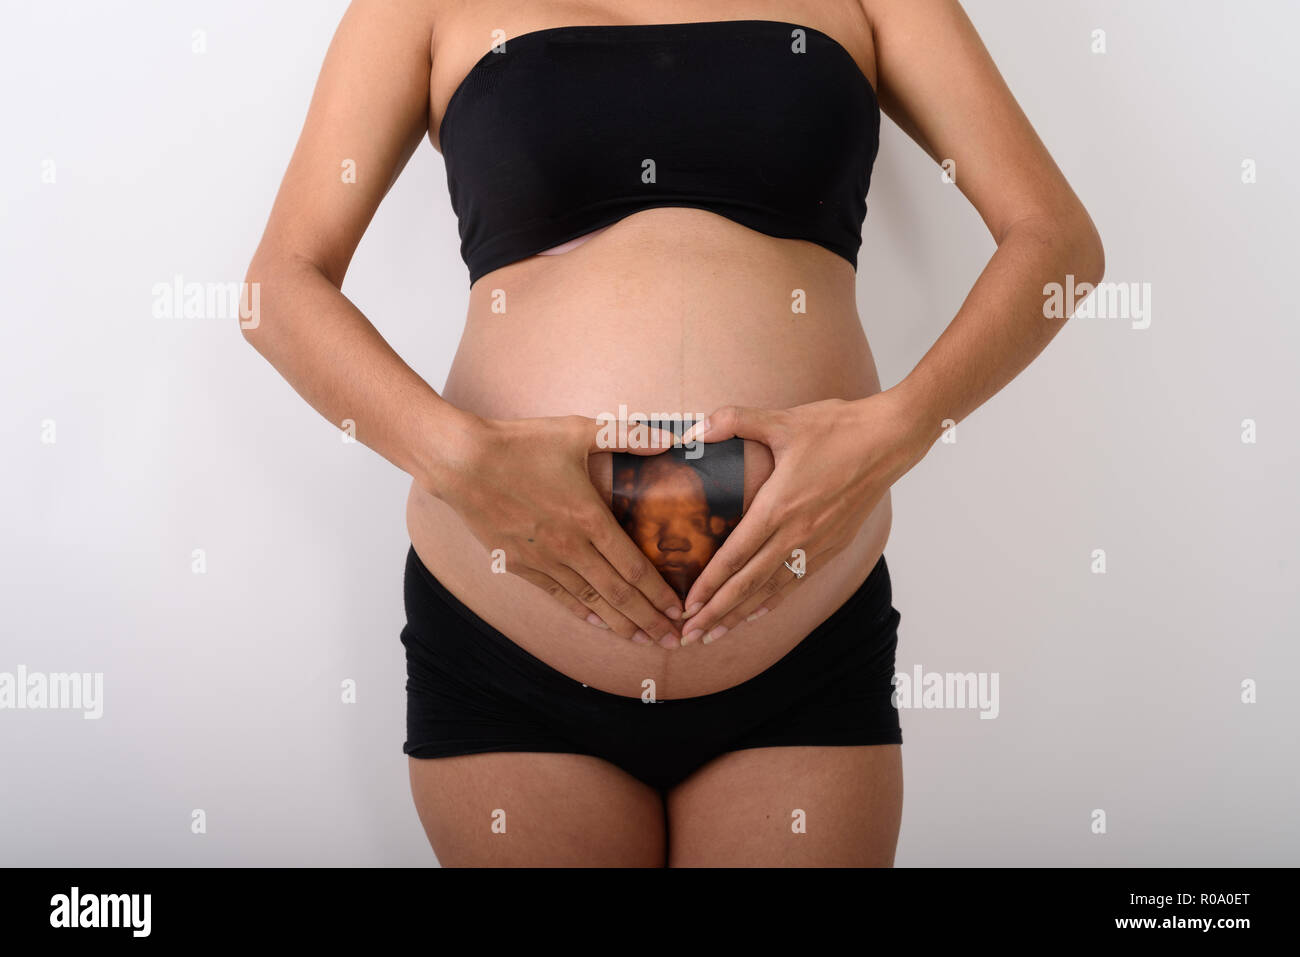 Asiatische schwangere Frau Holding sonogram Ihres Babys Stockfoto